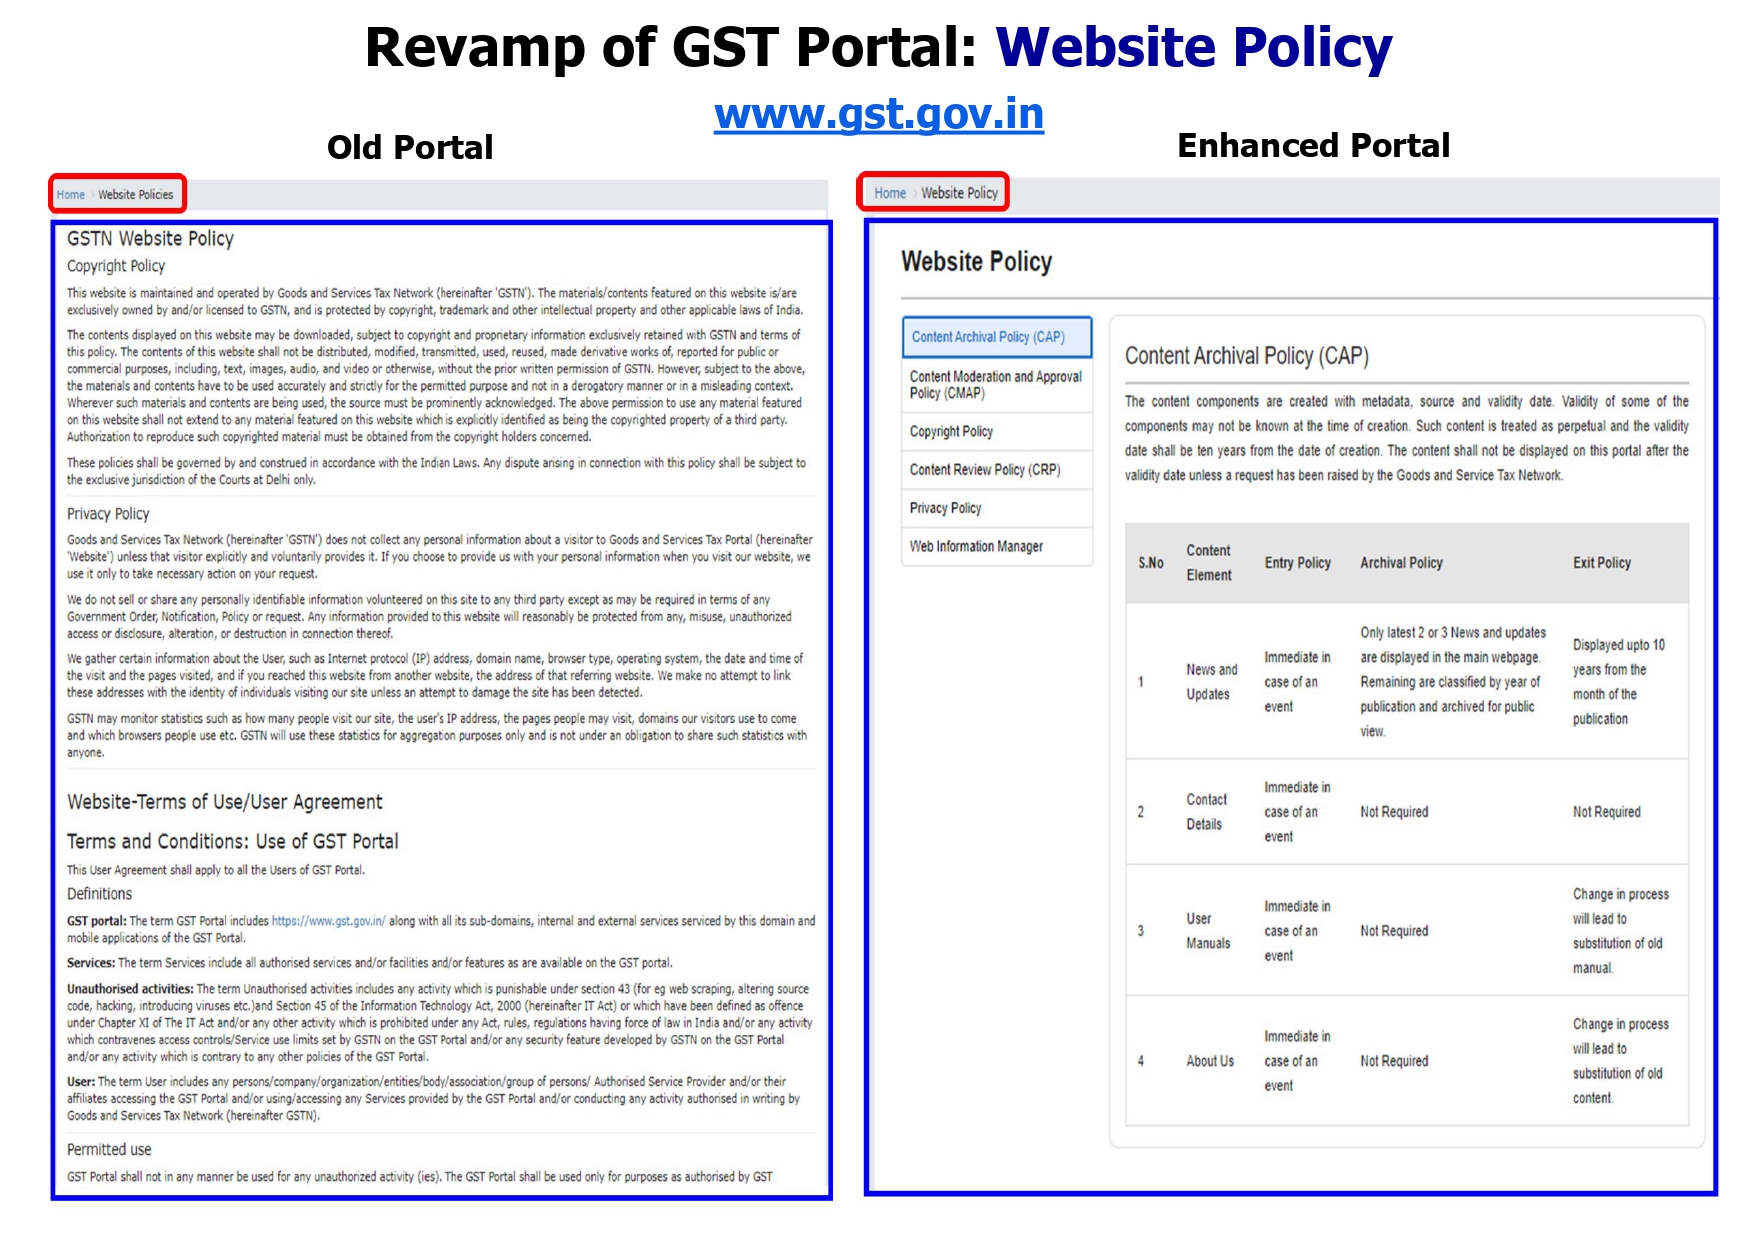 Enhancement in the GST Portal